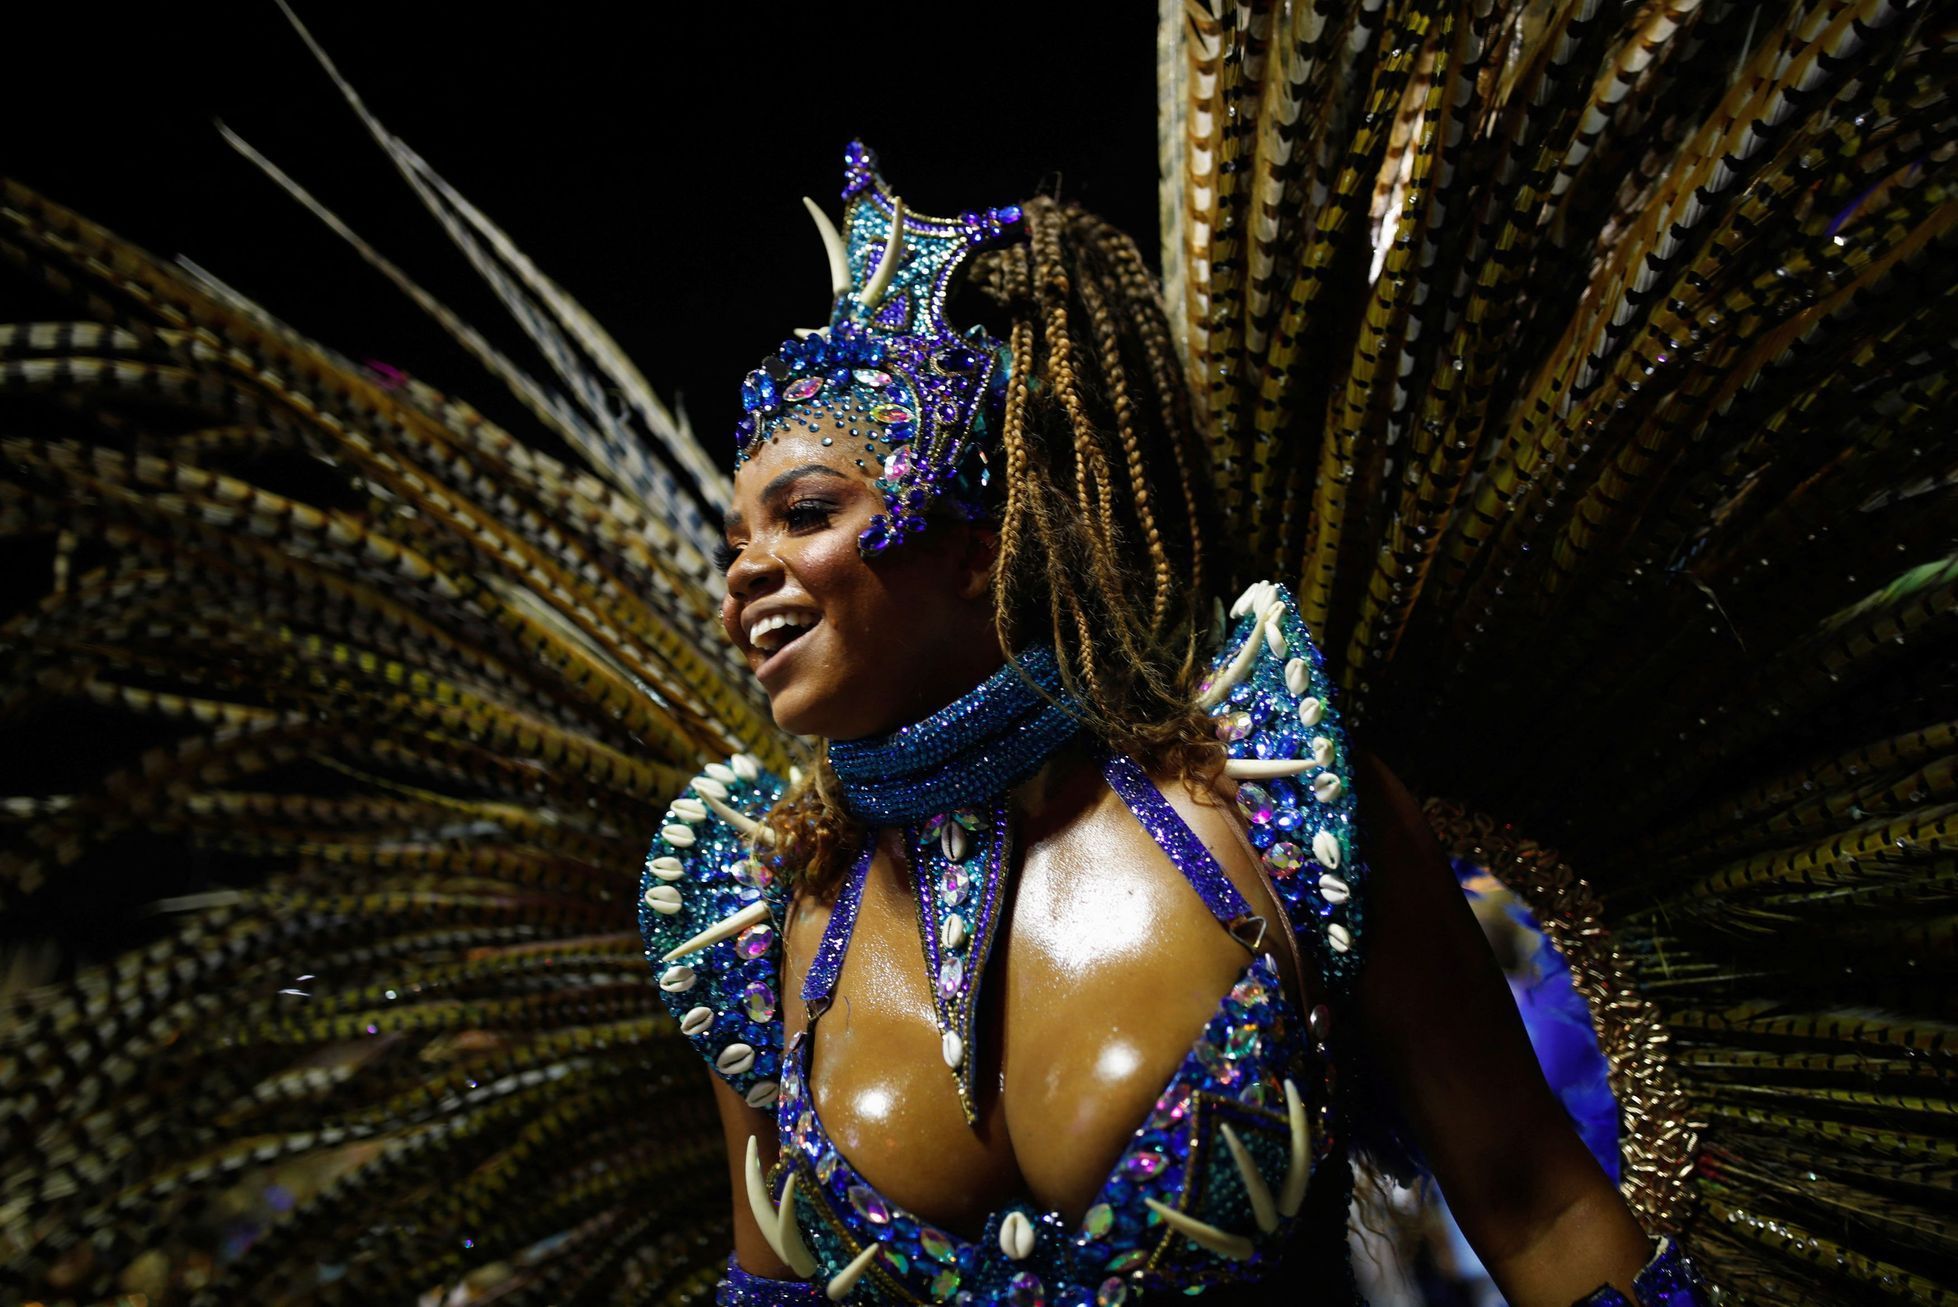 Rio de Janeiro karneval